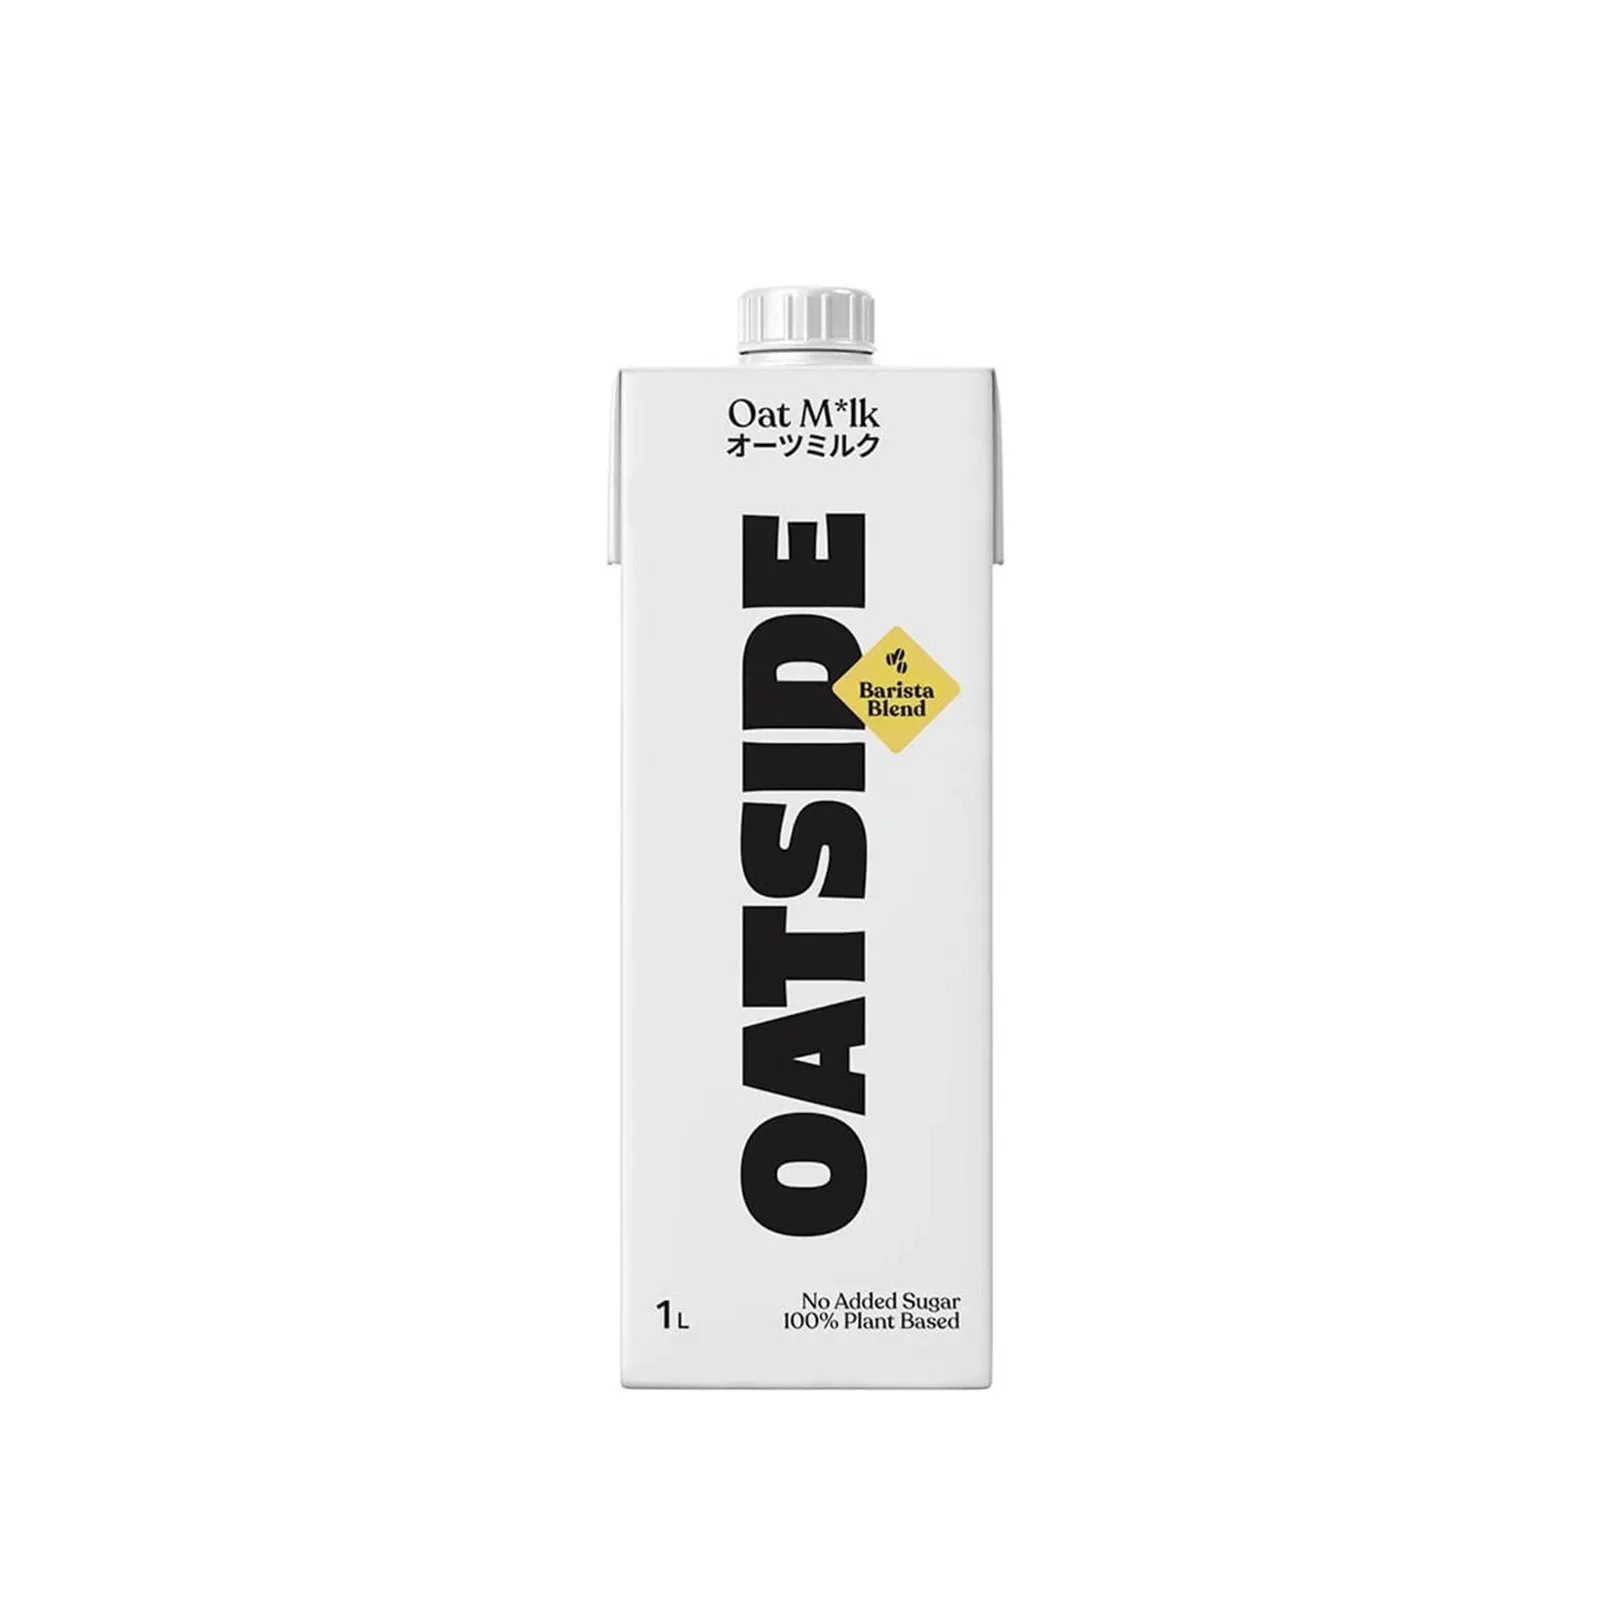 oatside original oat milk barista blend 1L carton